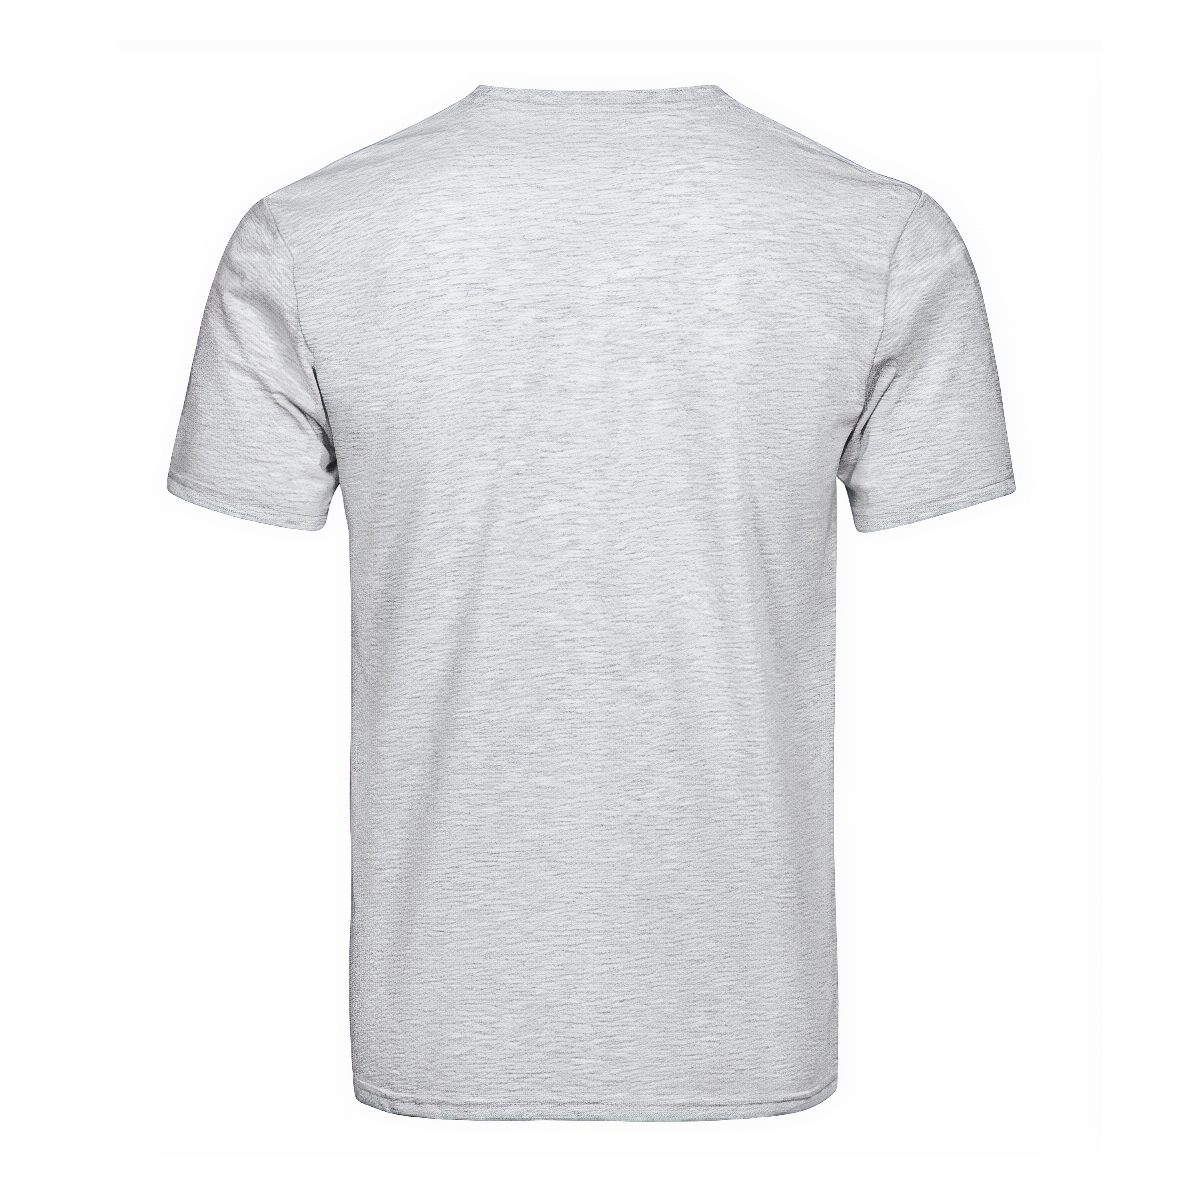 Hall Tartan Crest T-shirt - I'm not yelling style